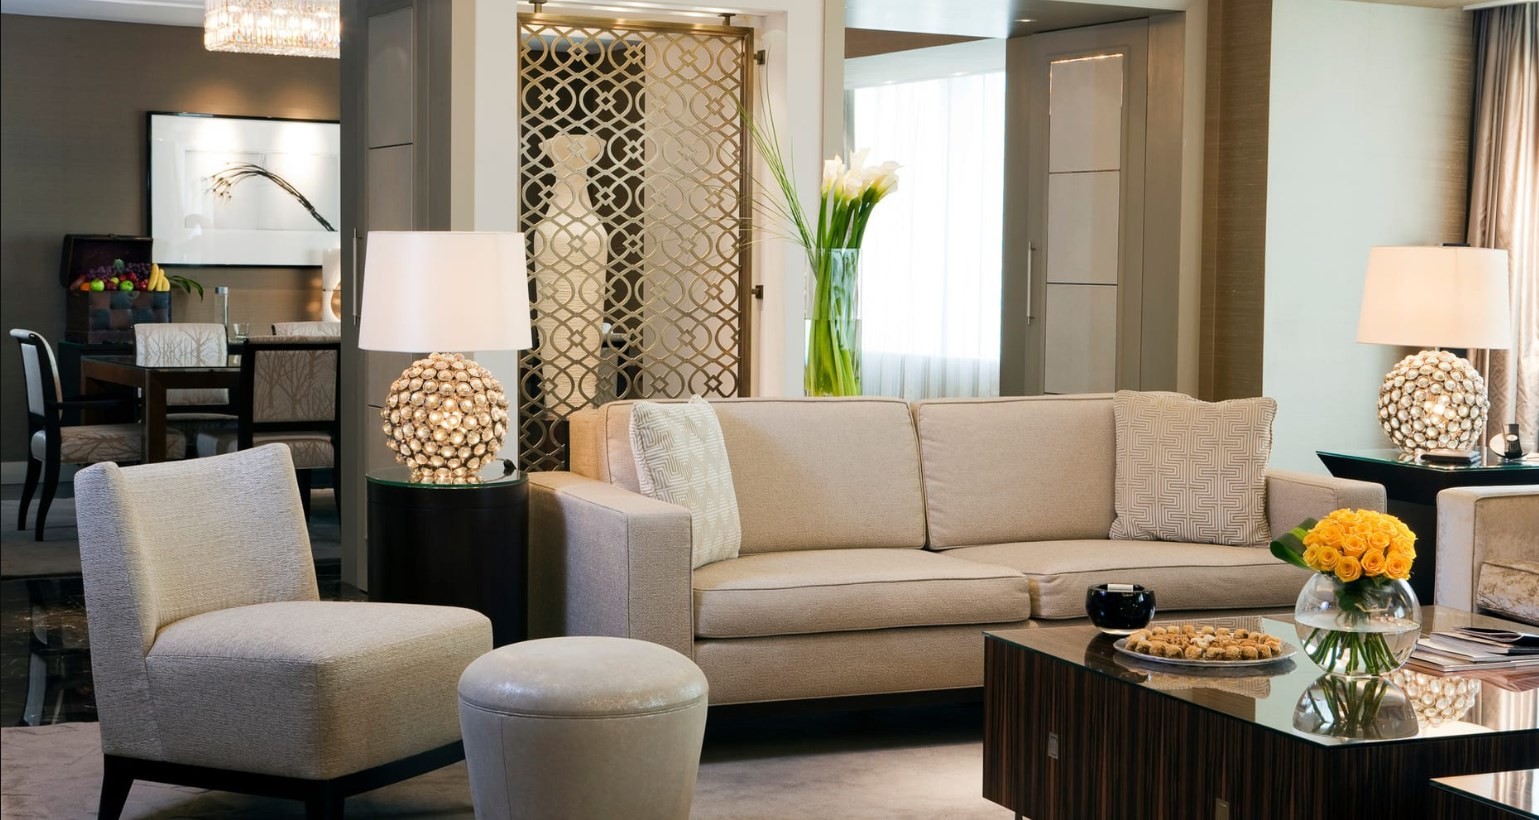 news-main-four-seasons-hotel-riyadh-renovation-project-bringing-saudi-heritage-to-life.1577374933.jpg